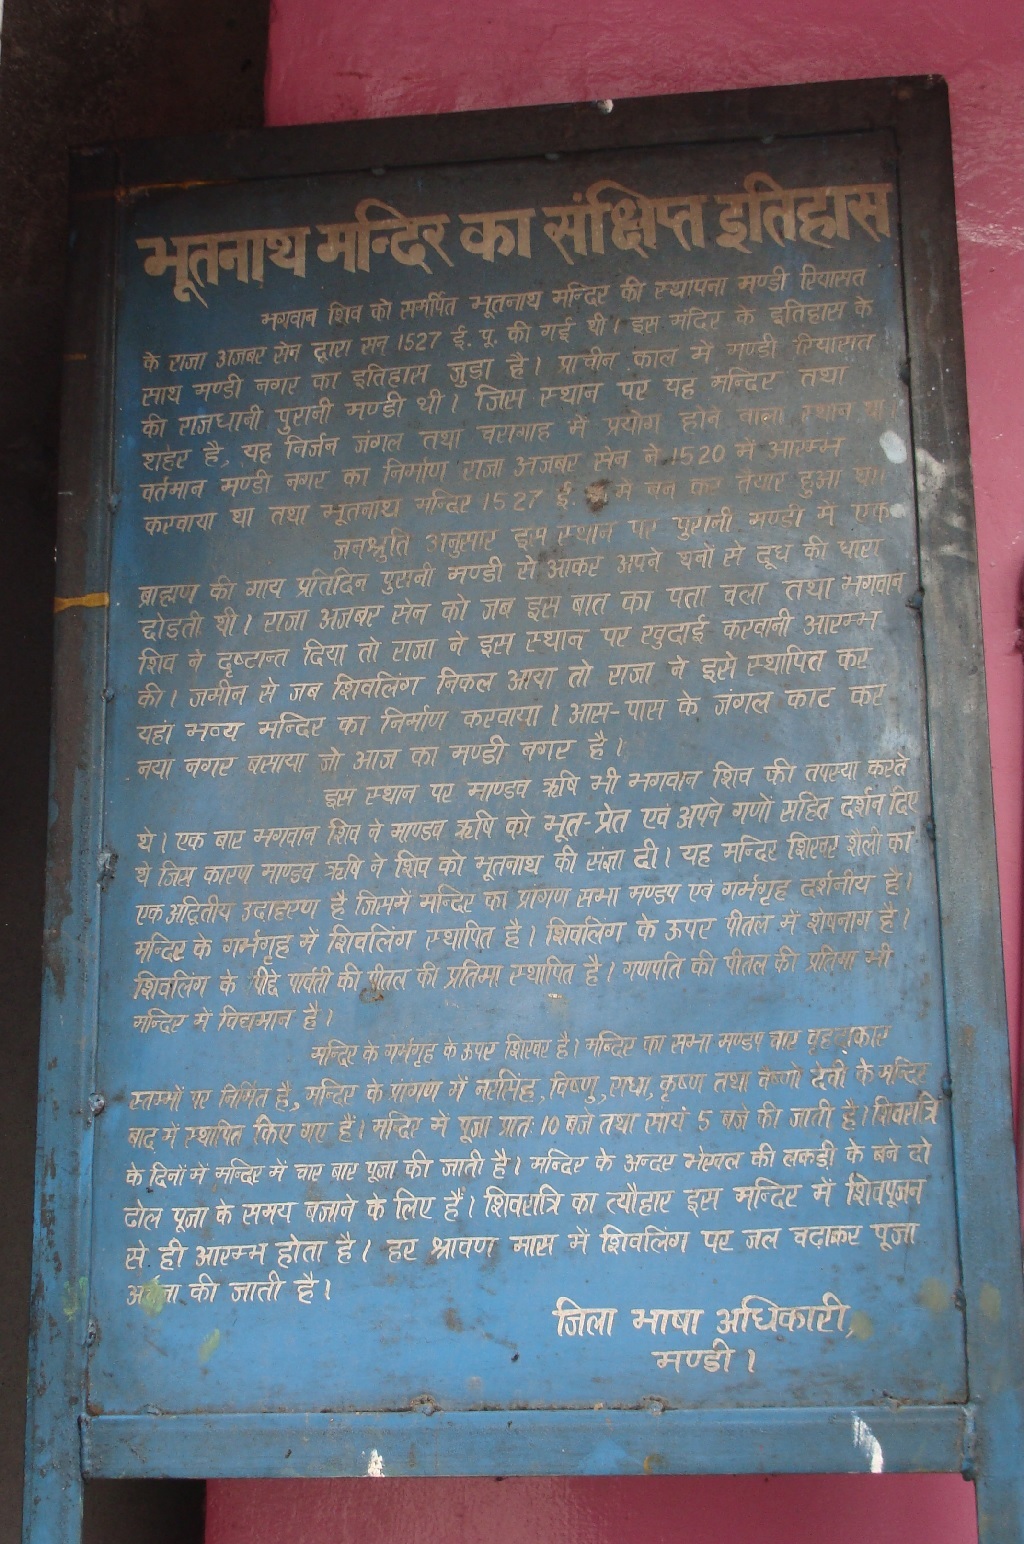 Brief History About Bhootnath Mandir – Built in 1527 A.D.